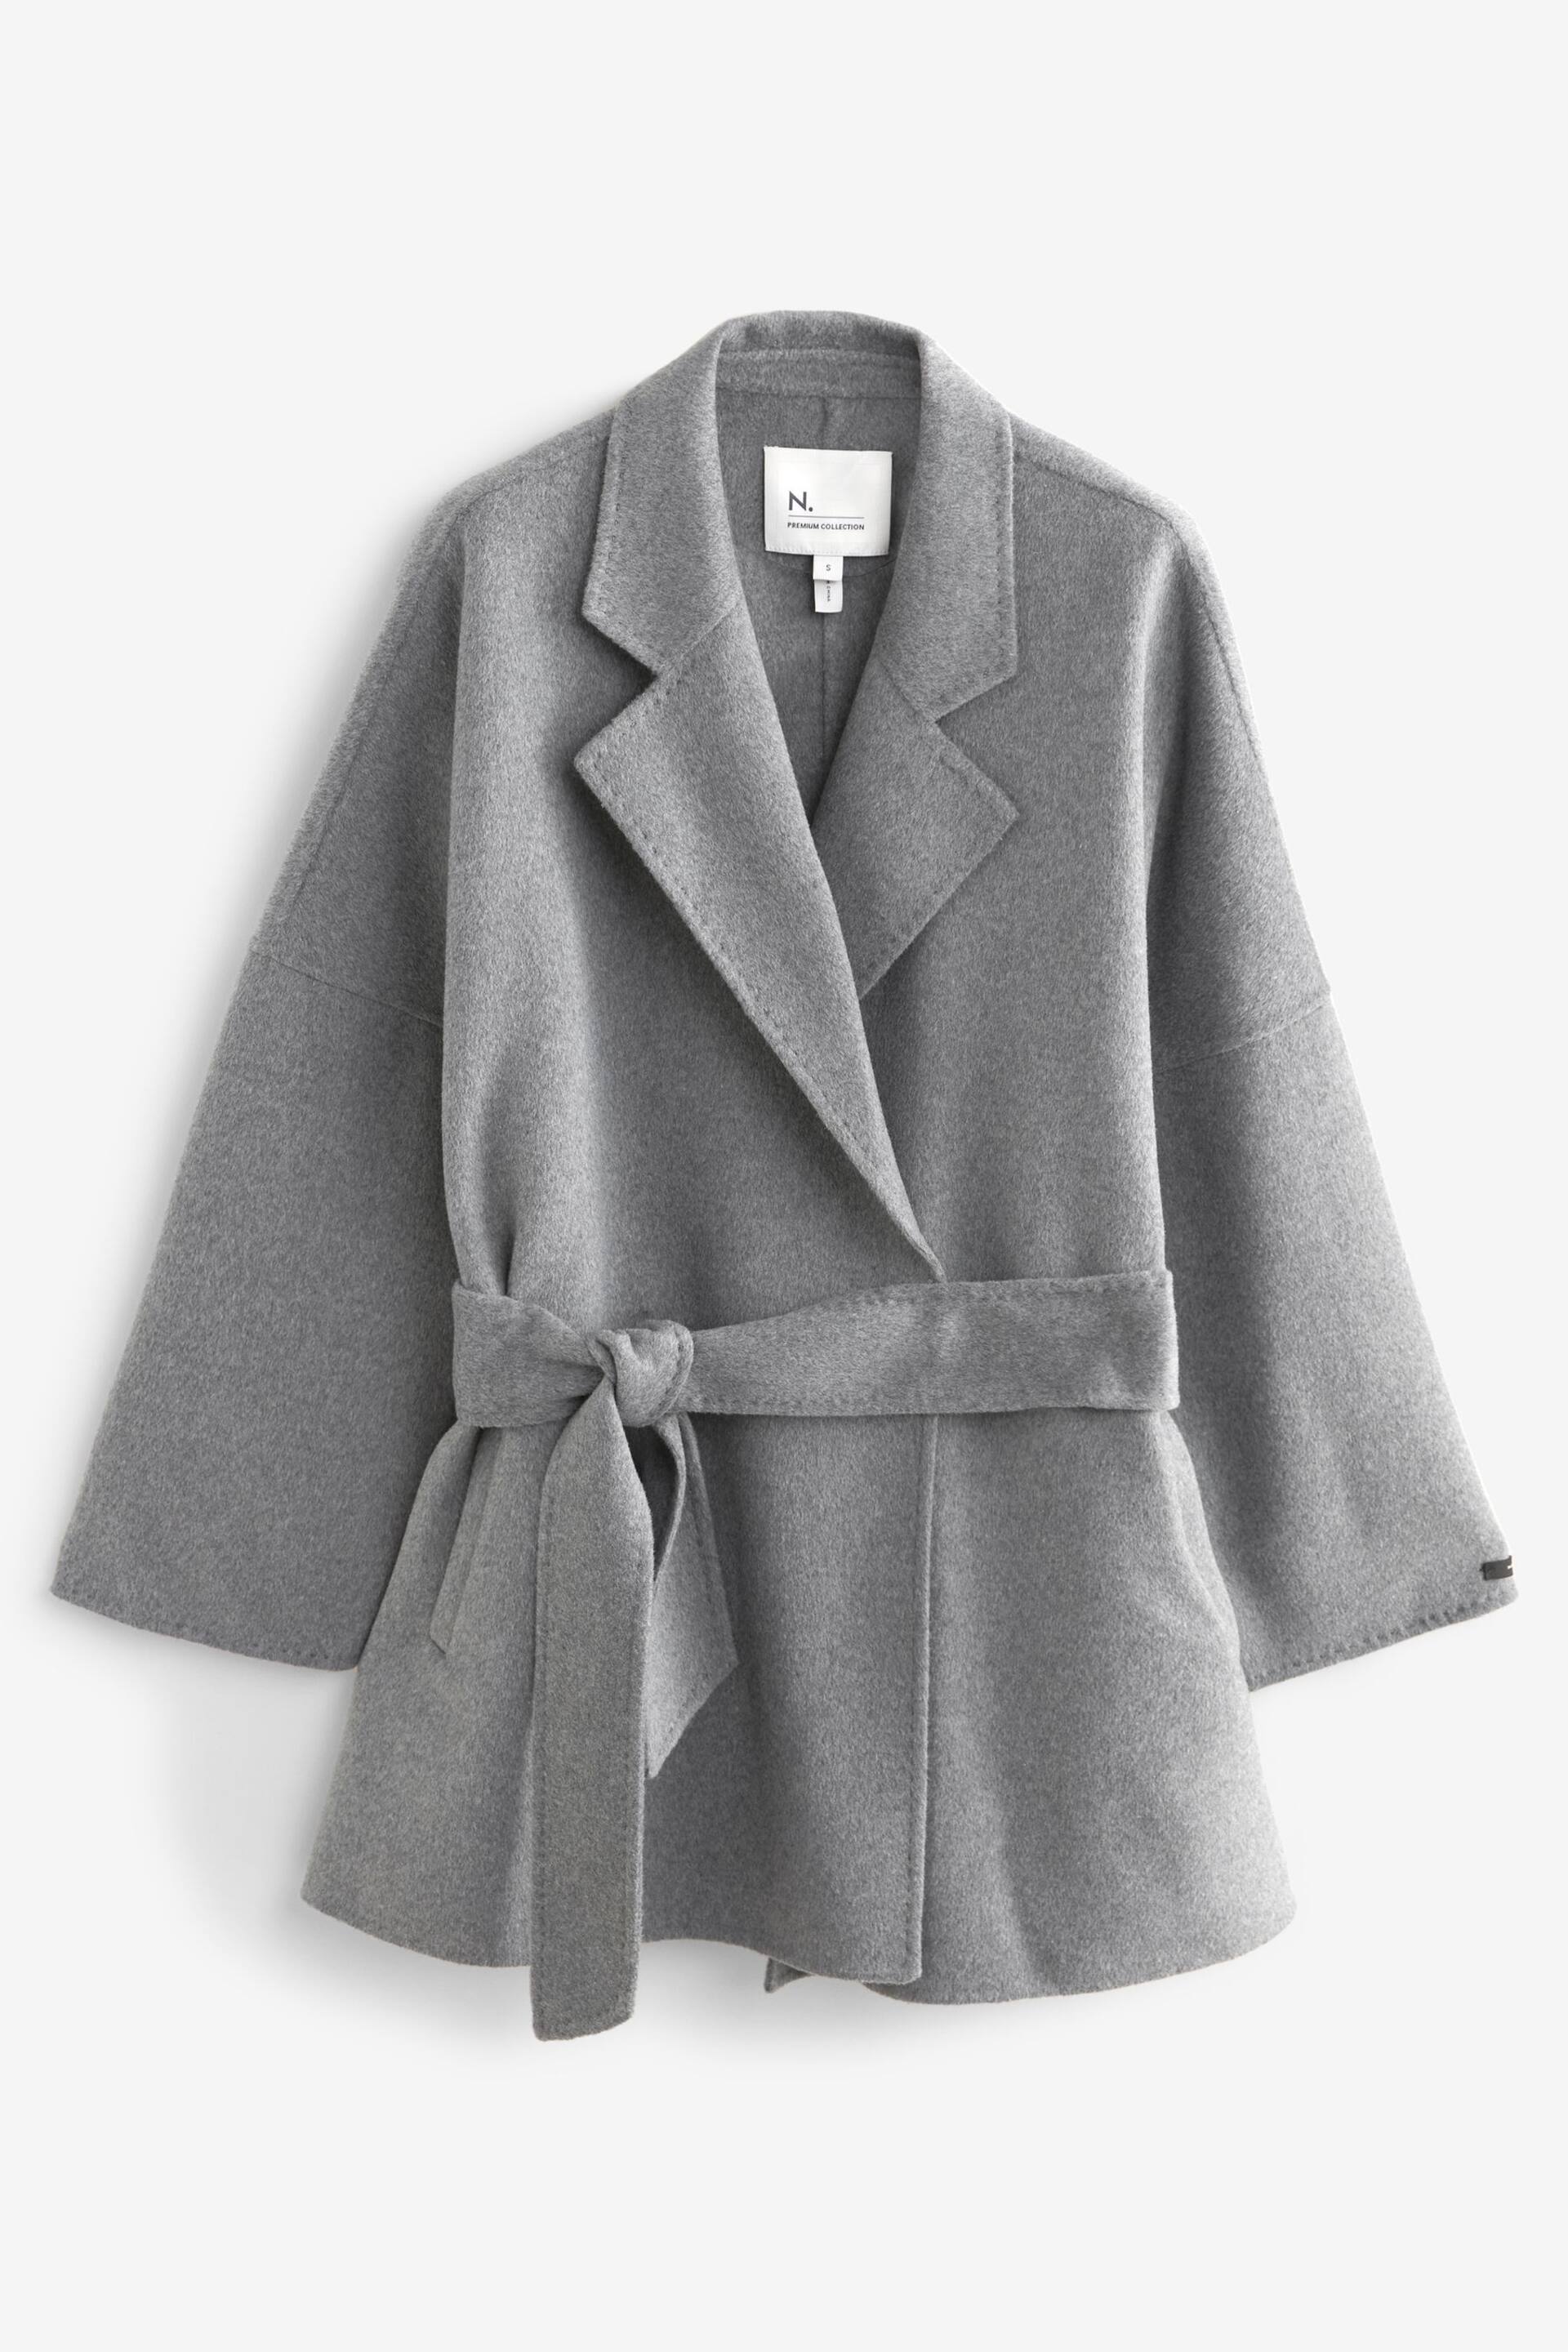 Grey Handsewn Wool Blend Belted Coat - Image 6 of 9